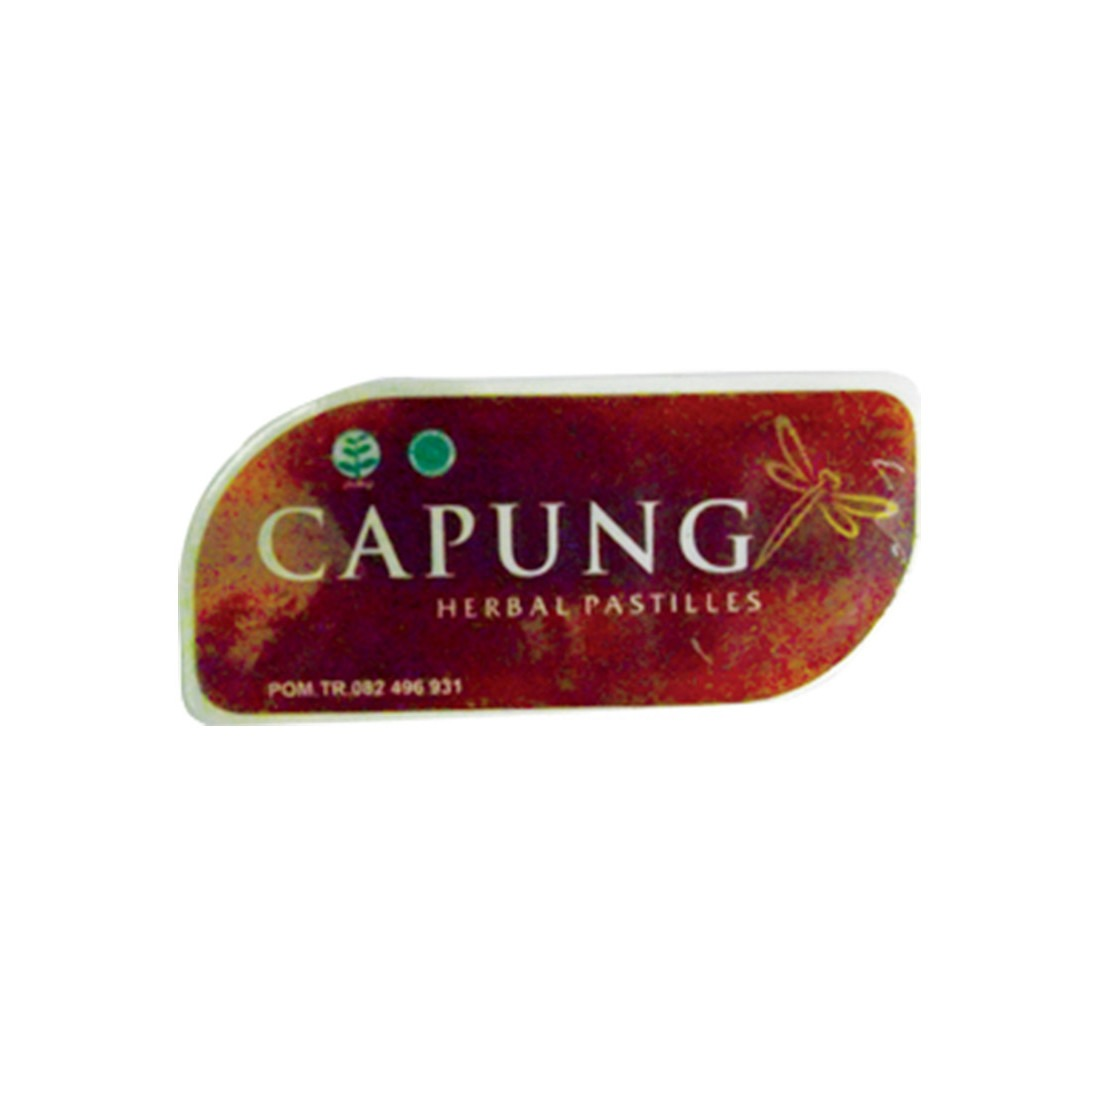 Capung 7G Herbal Pastilles